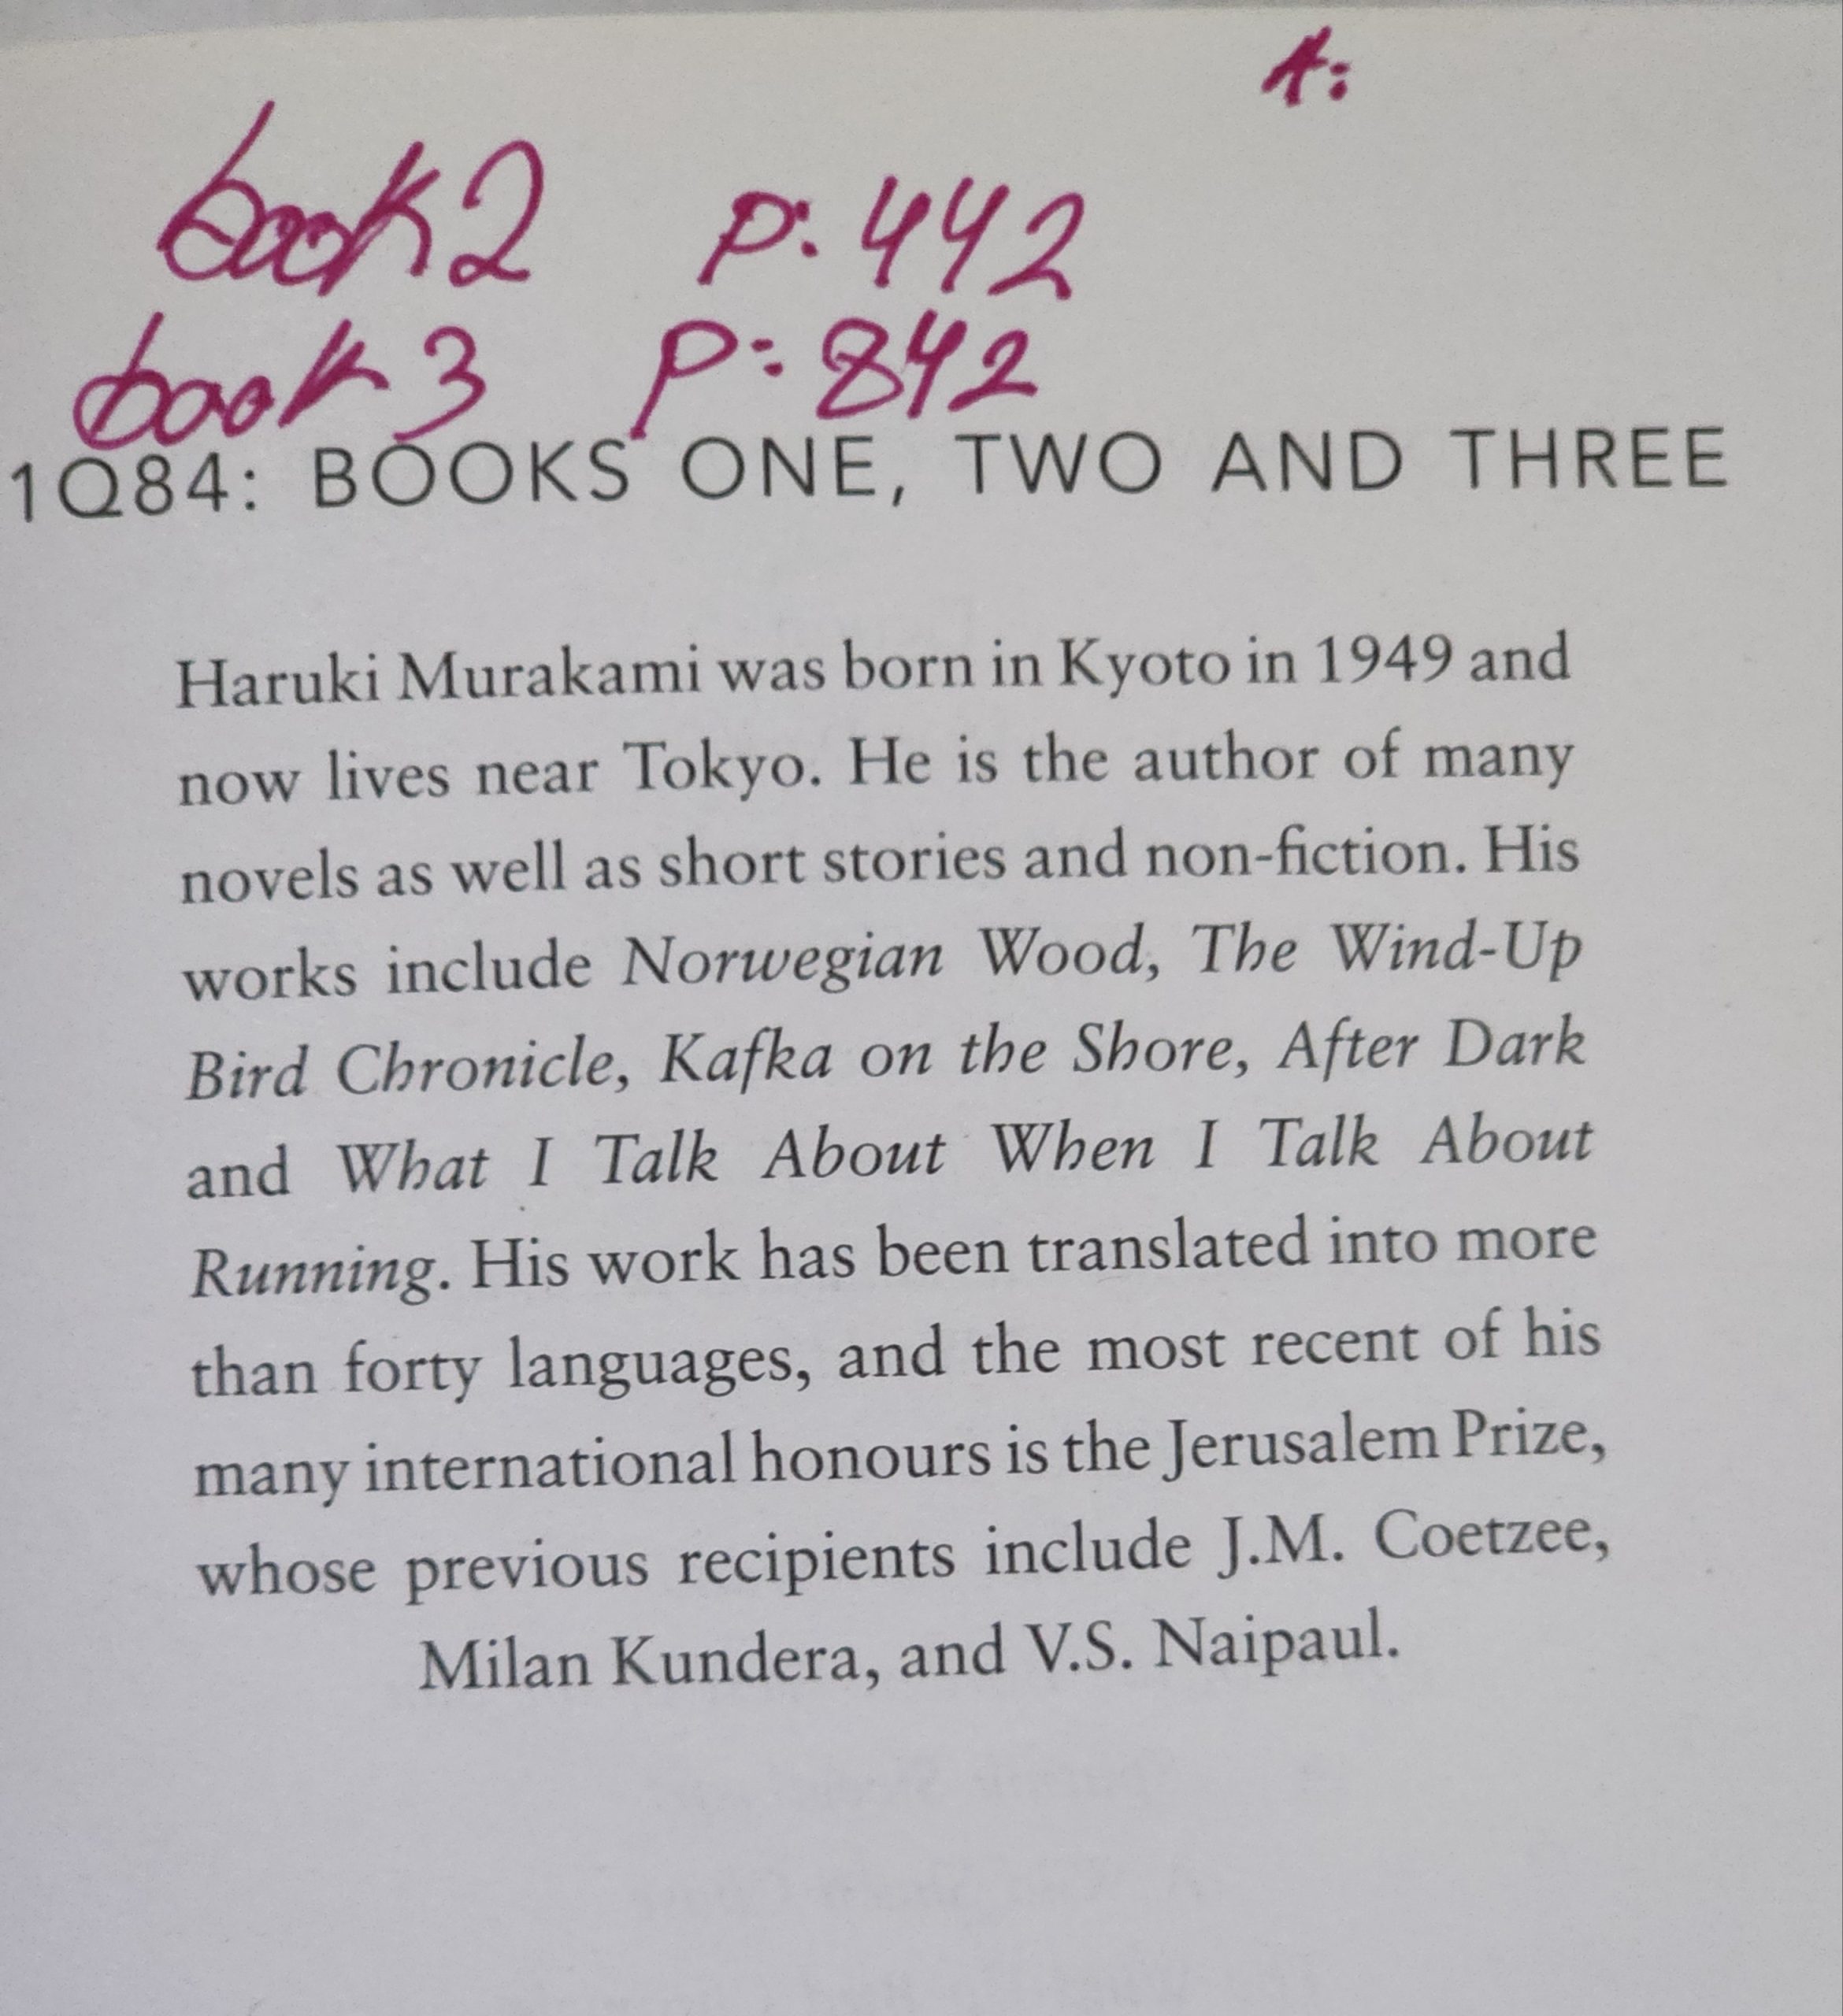 1Q84 The complete Trilogy by HARUKI MURAKAMI